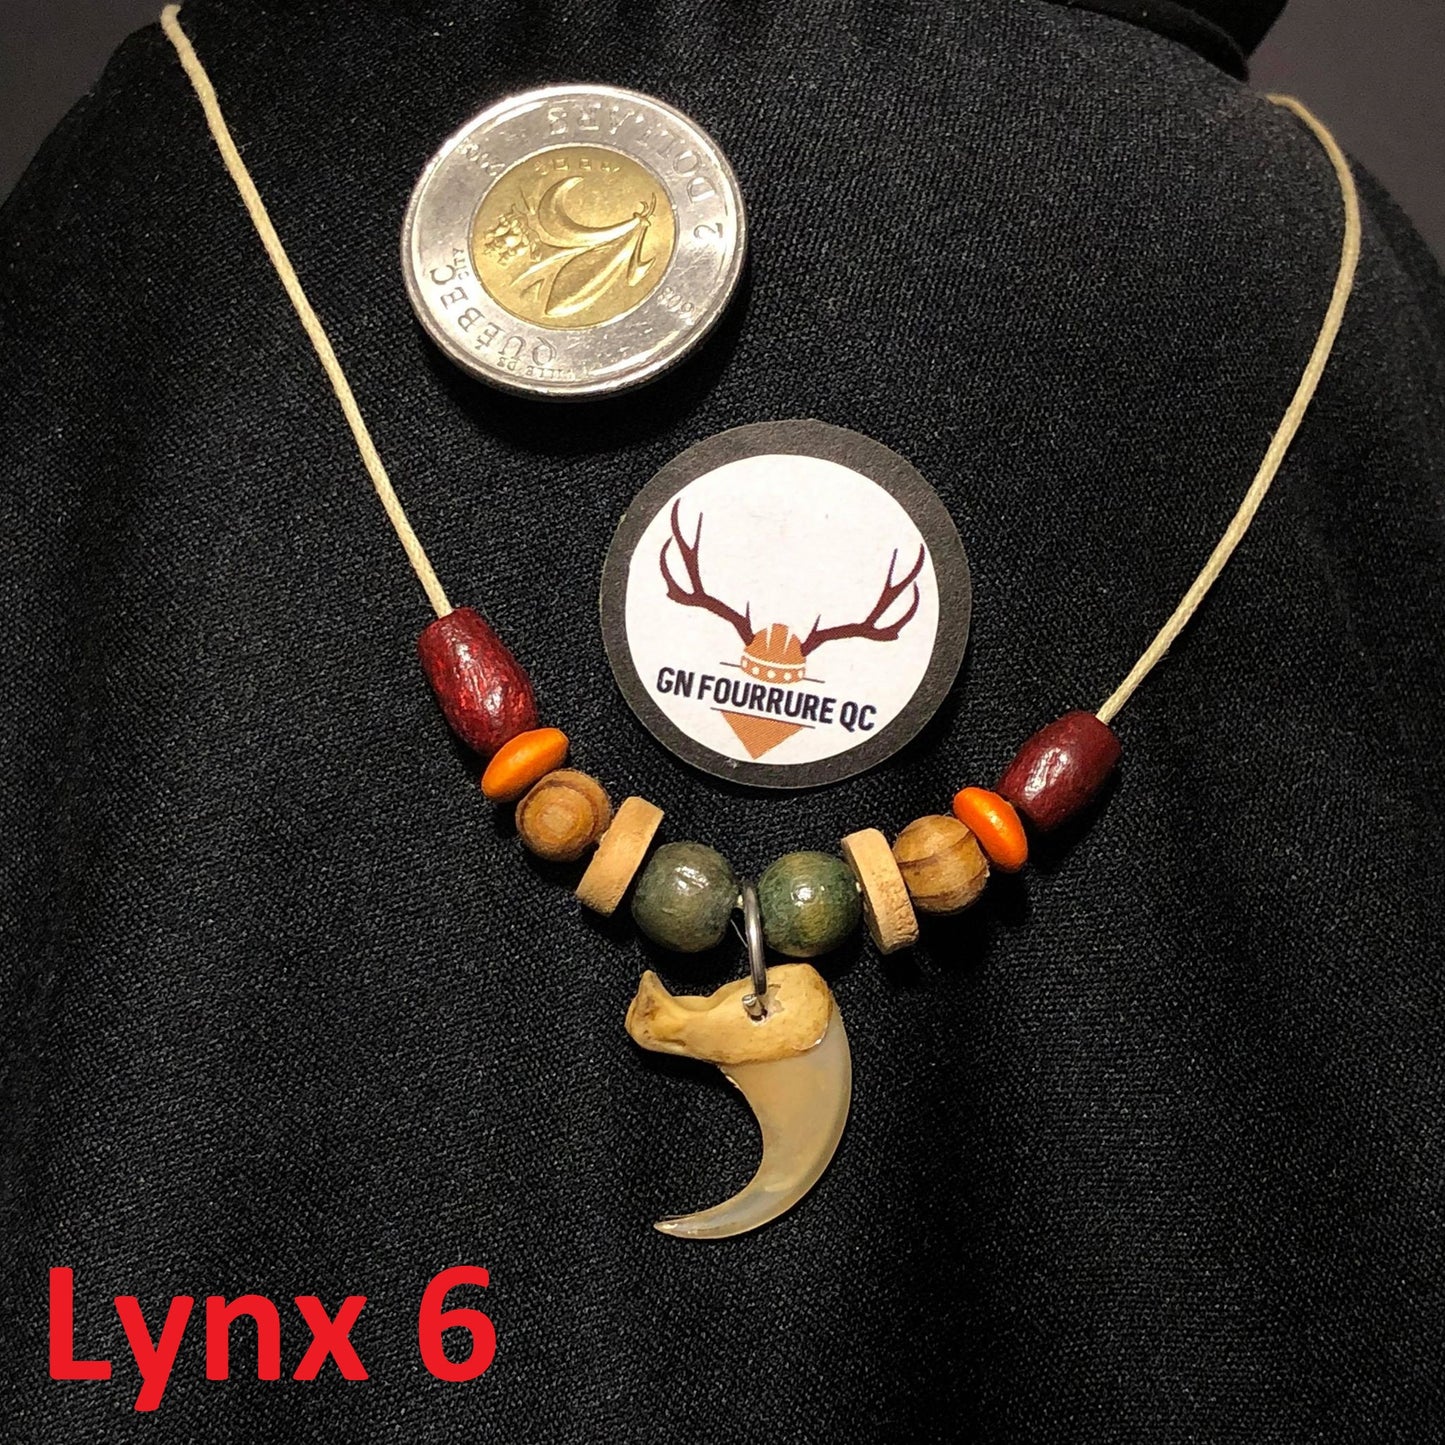 Lynx Claw Necklace